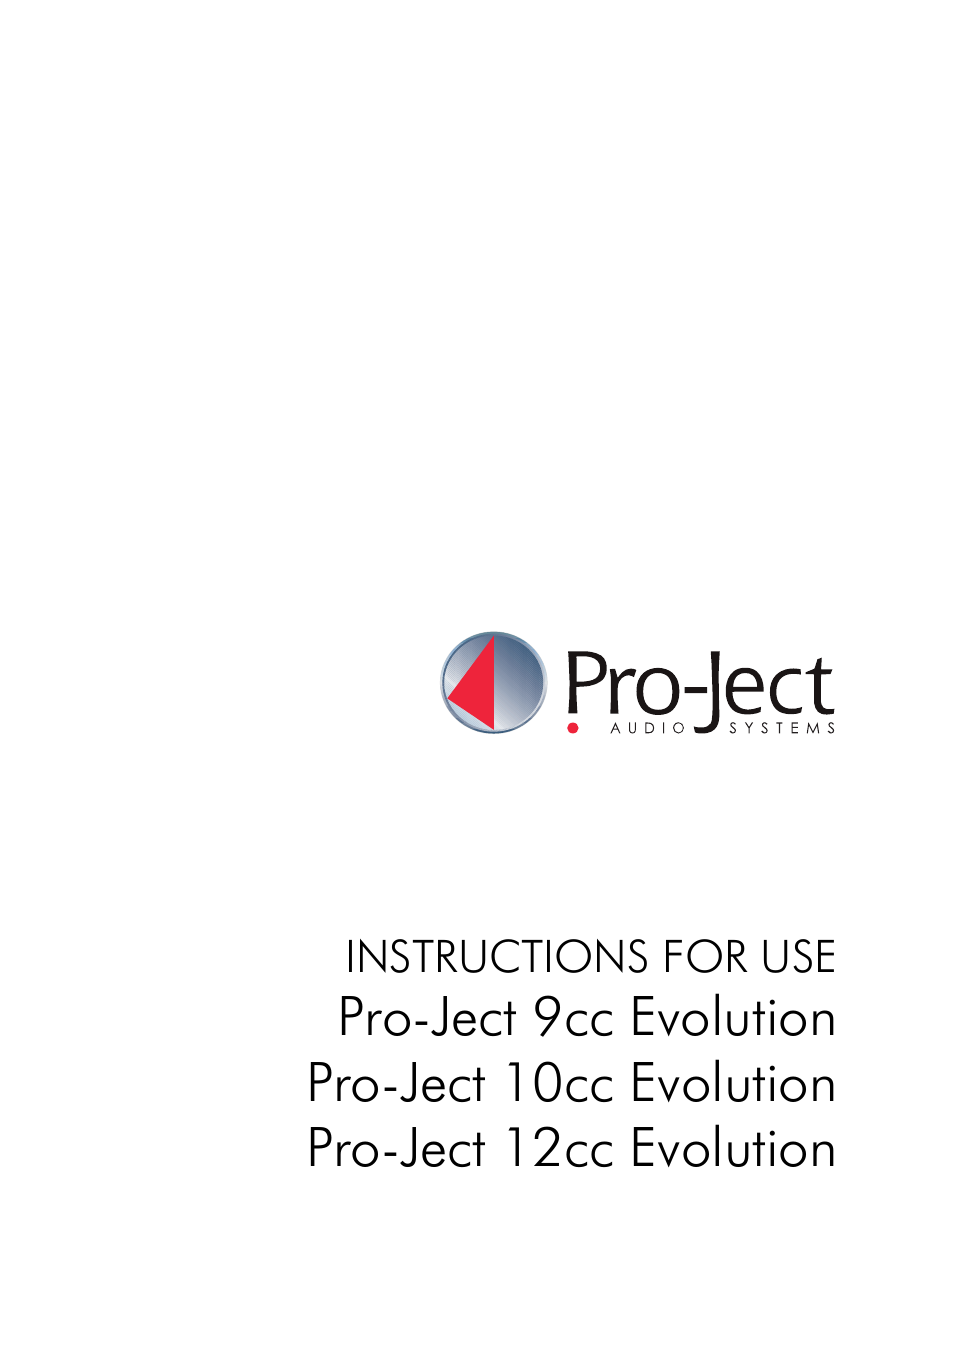 Pro-Ject 10cc Evolution